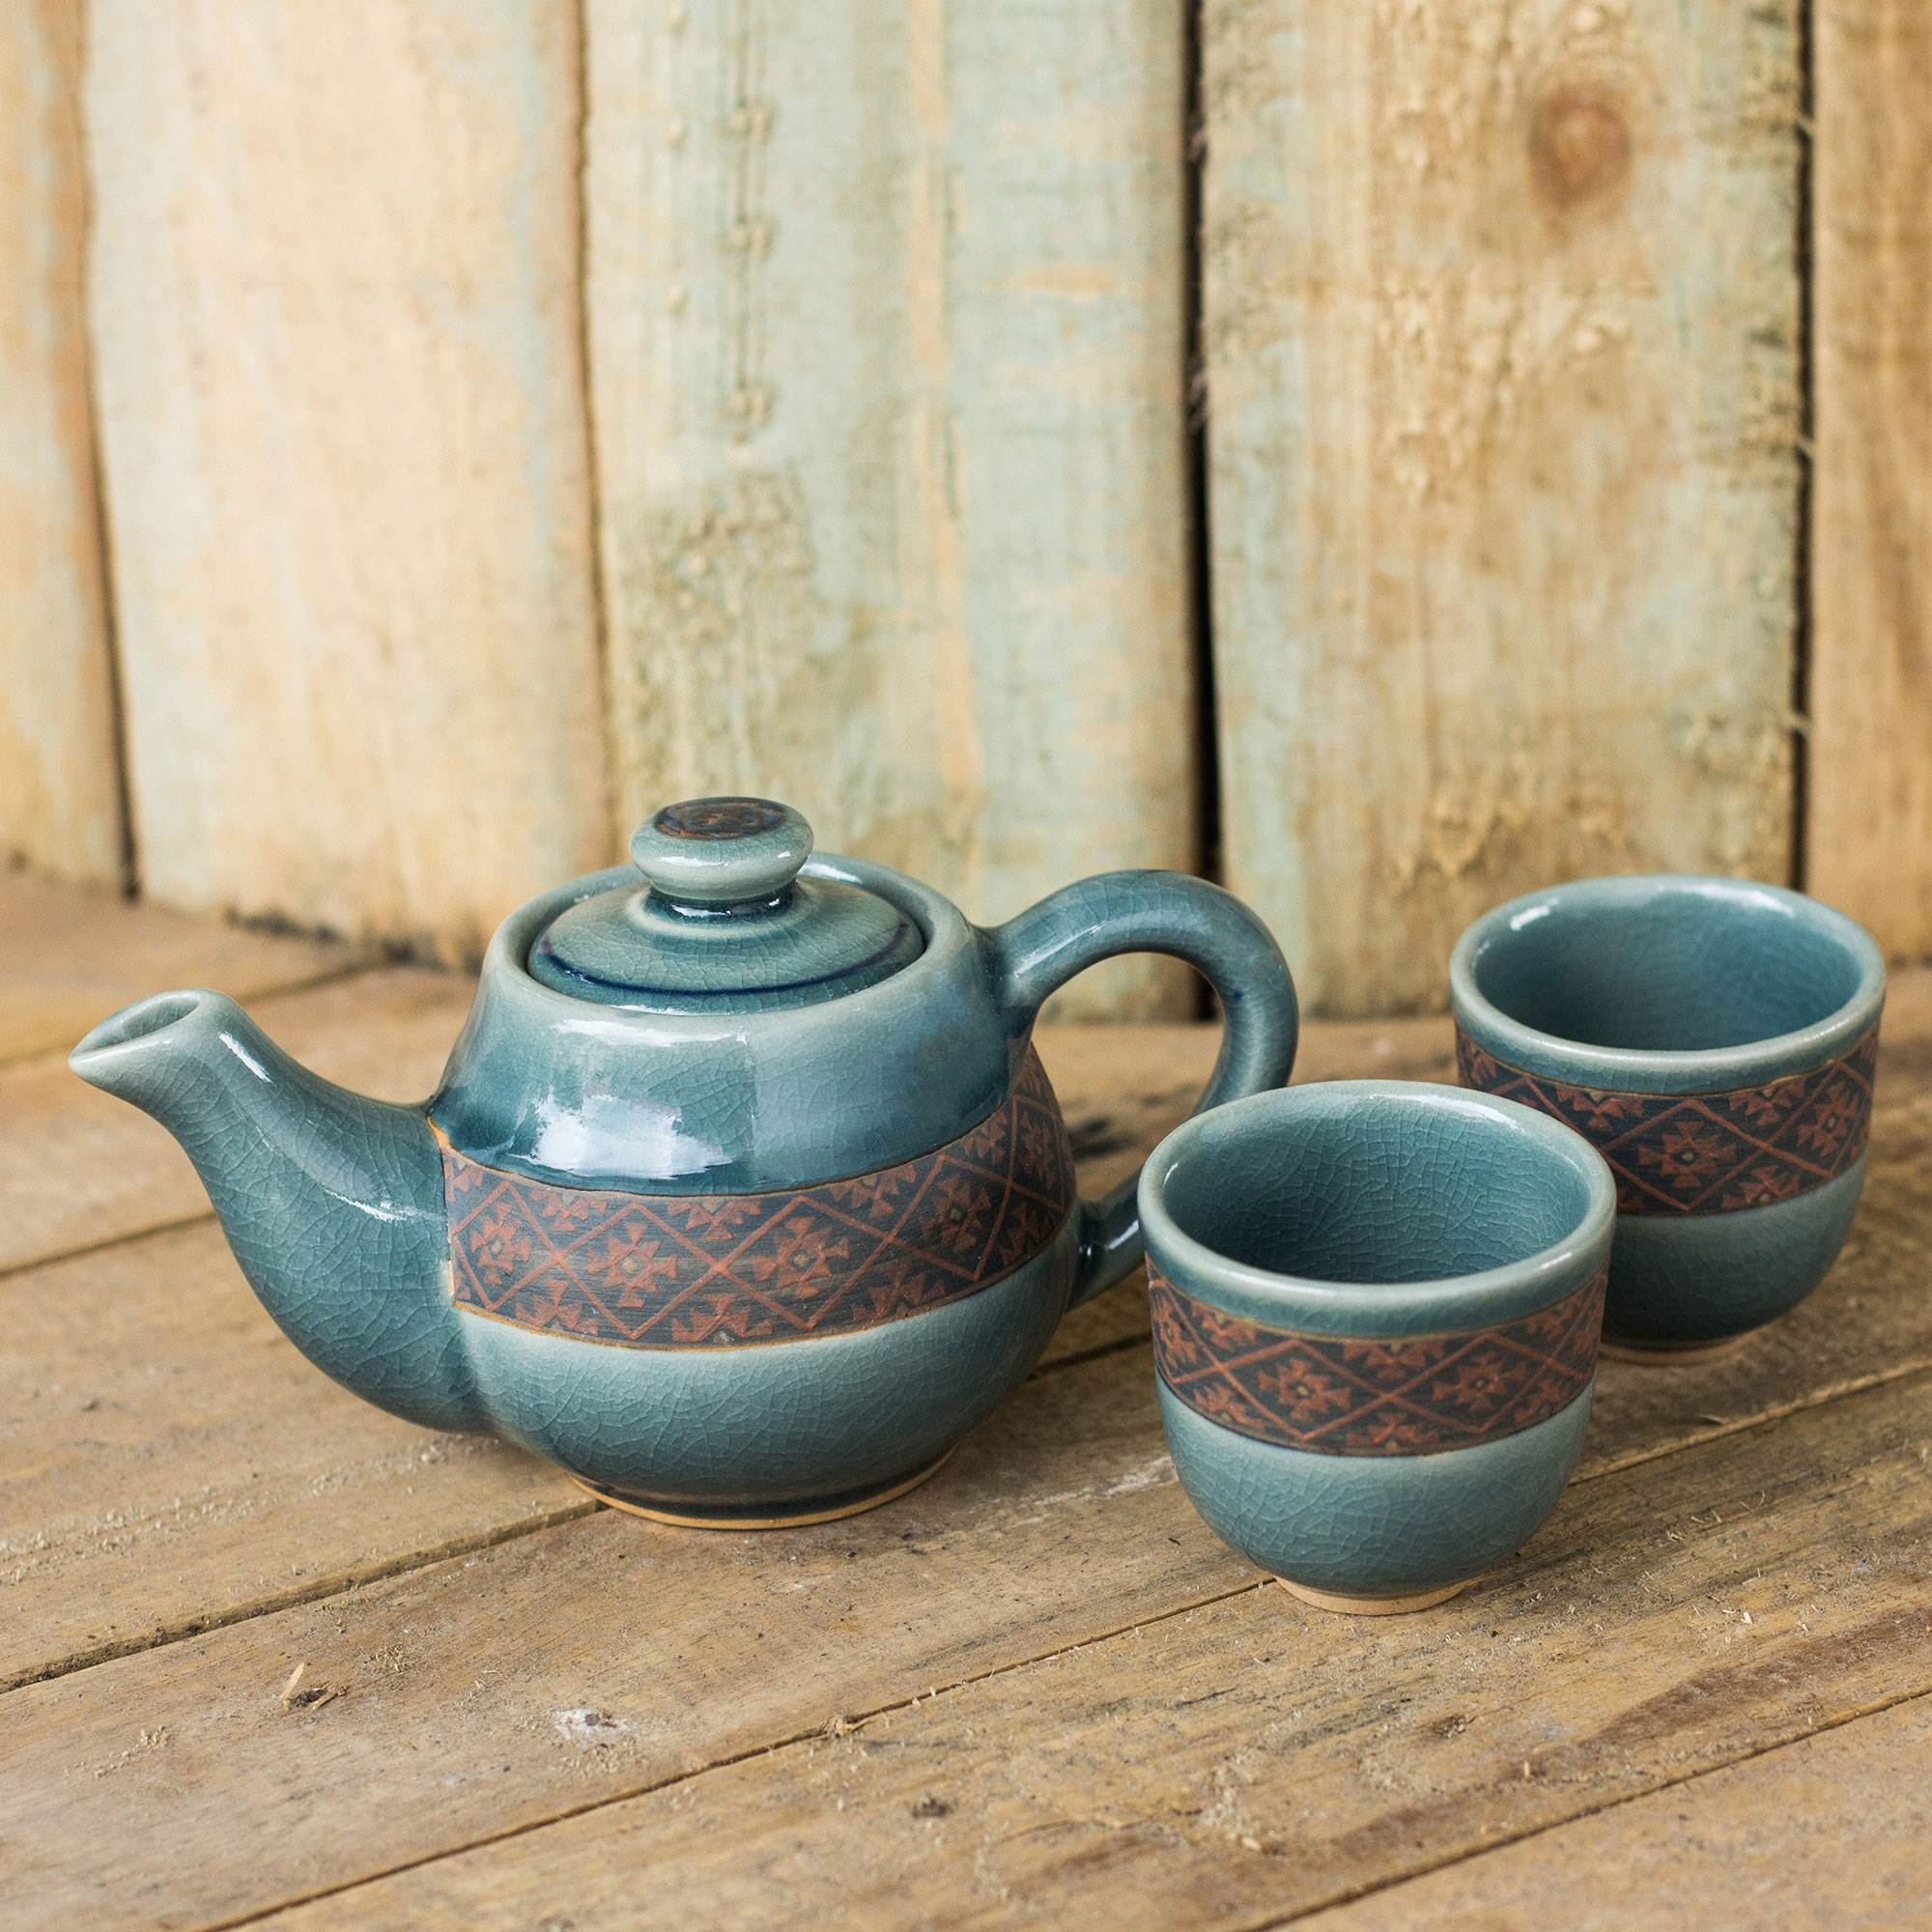 Ceramic Tea Caddy Delicate Crackle Glaze Celadon Porcelain Tea Canister Tea Accessory Gift for Tea Lover